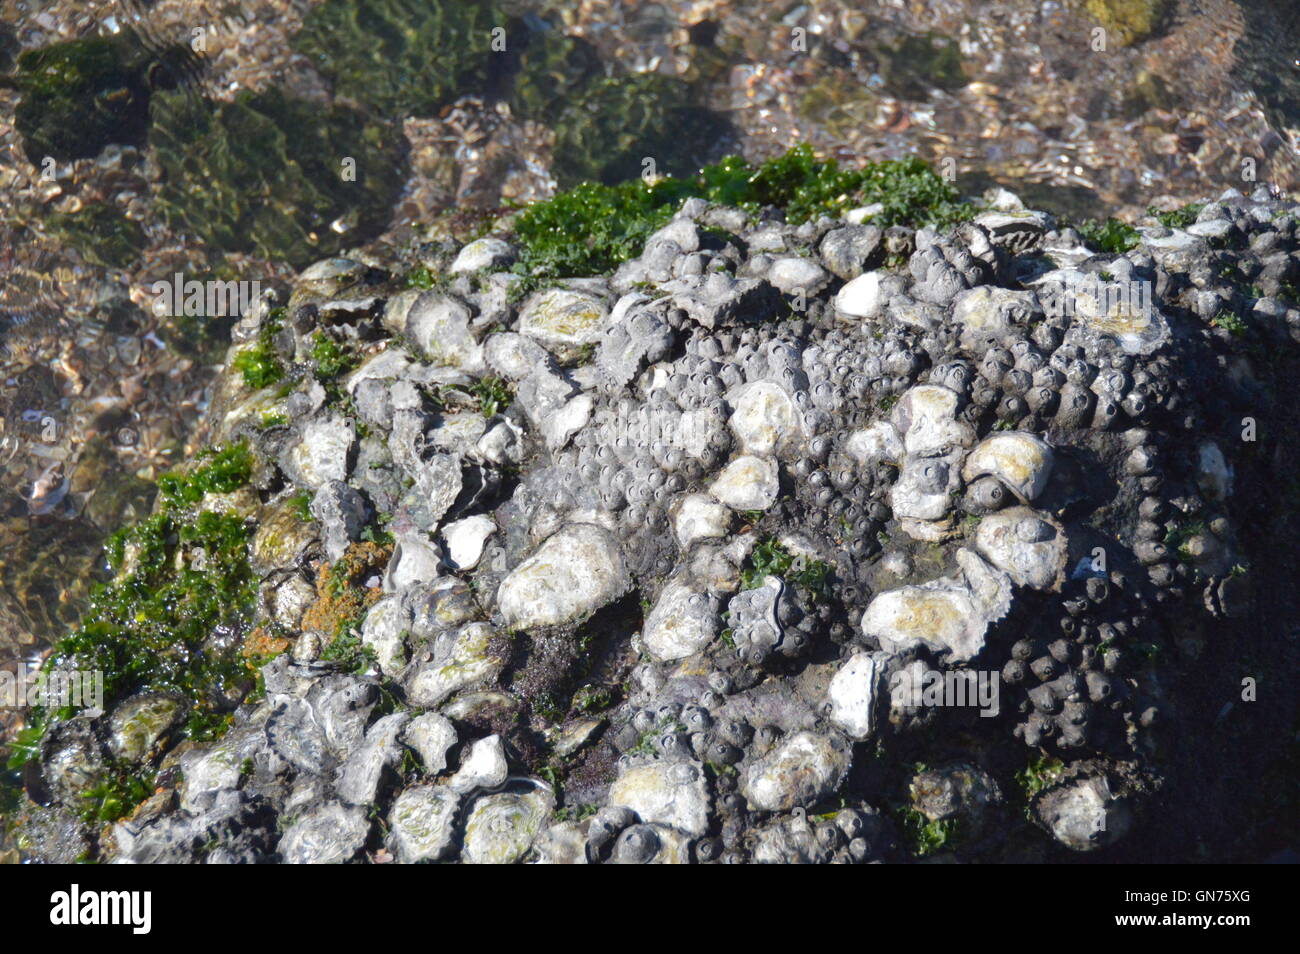 Oysters in the Guanabara bay Rio de Janeiro Brazil Stock Photo